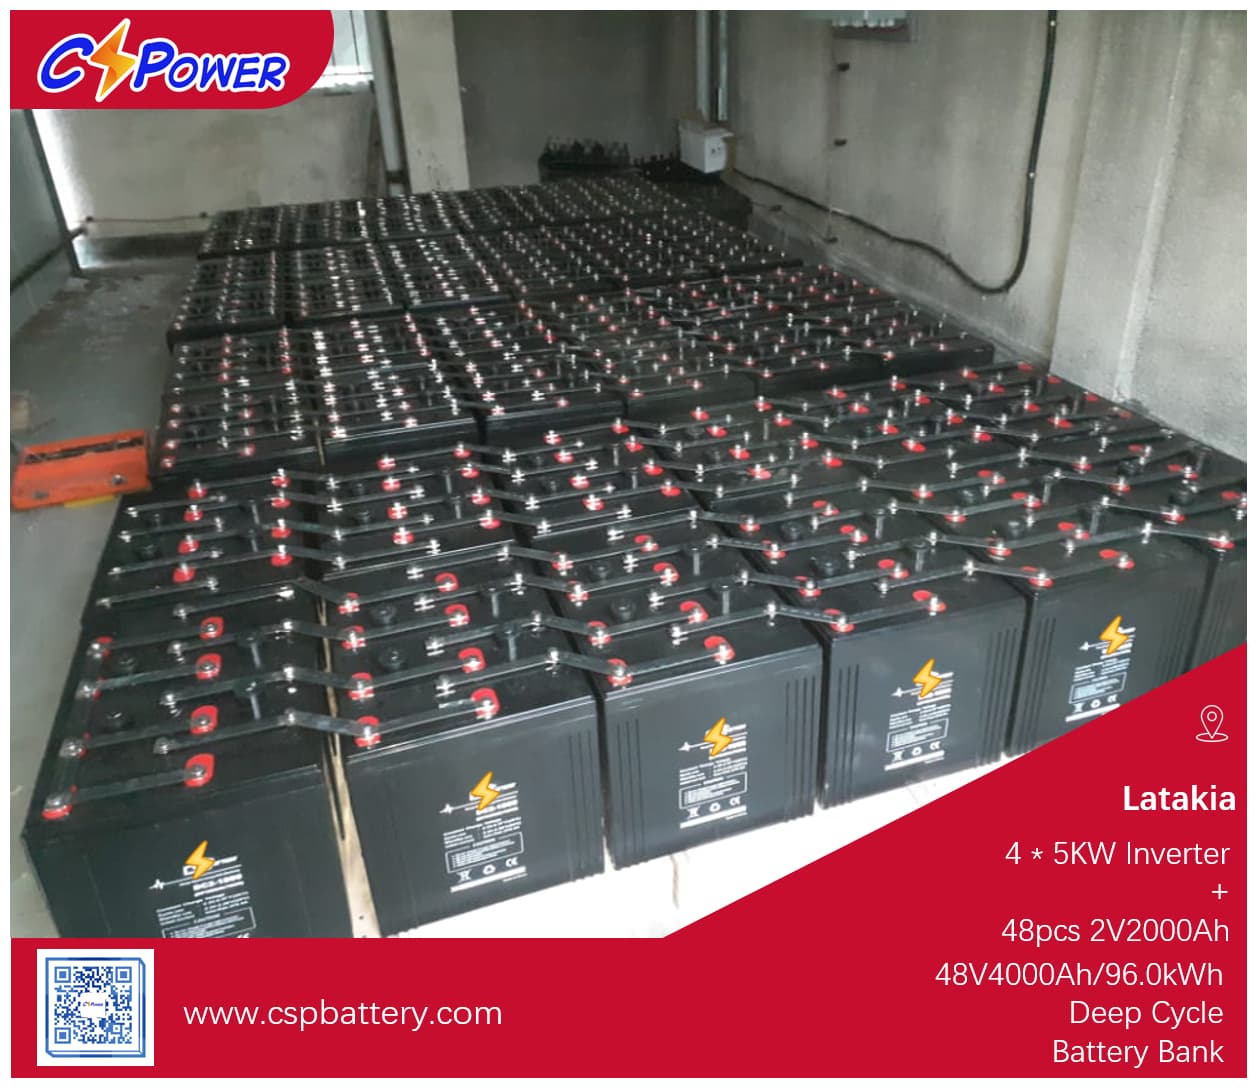 CSpower Battery Project in Latakia : 48PCS 2V 2000Ah Deep Cycle Gel Solar Battery